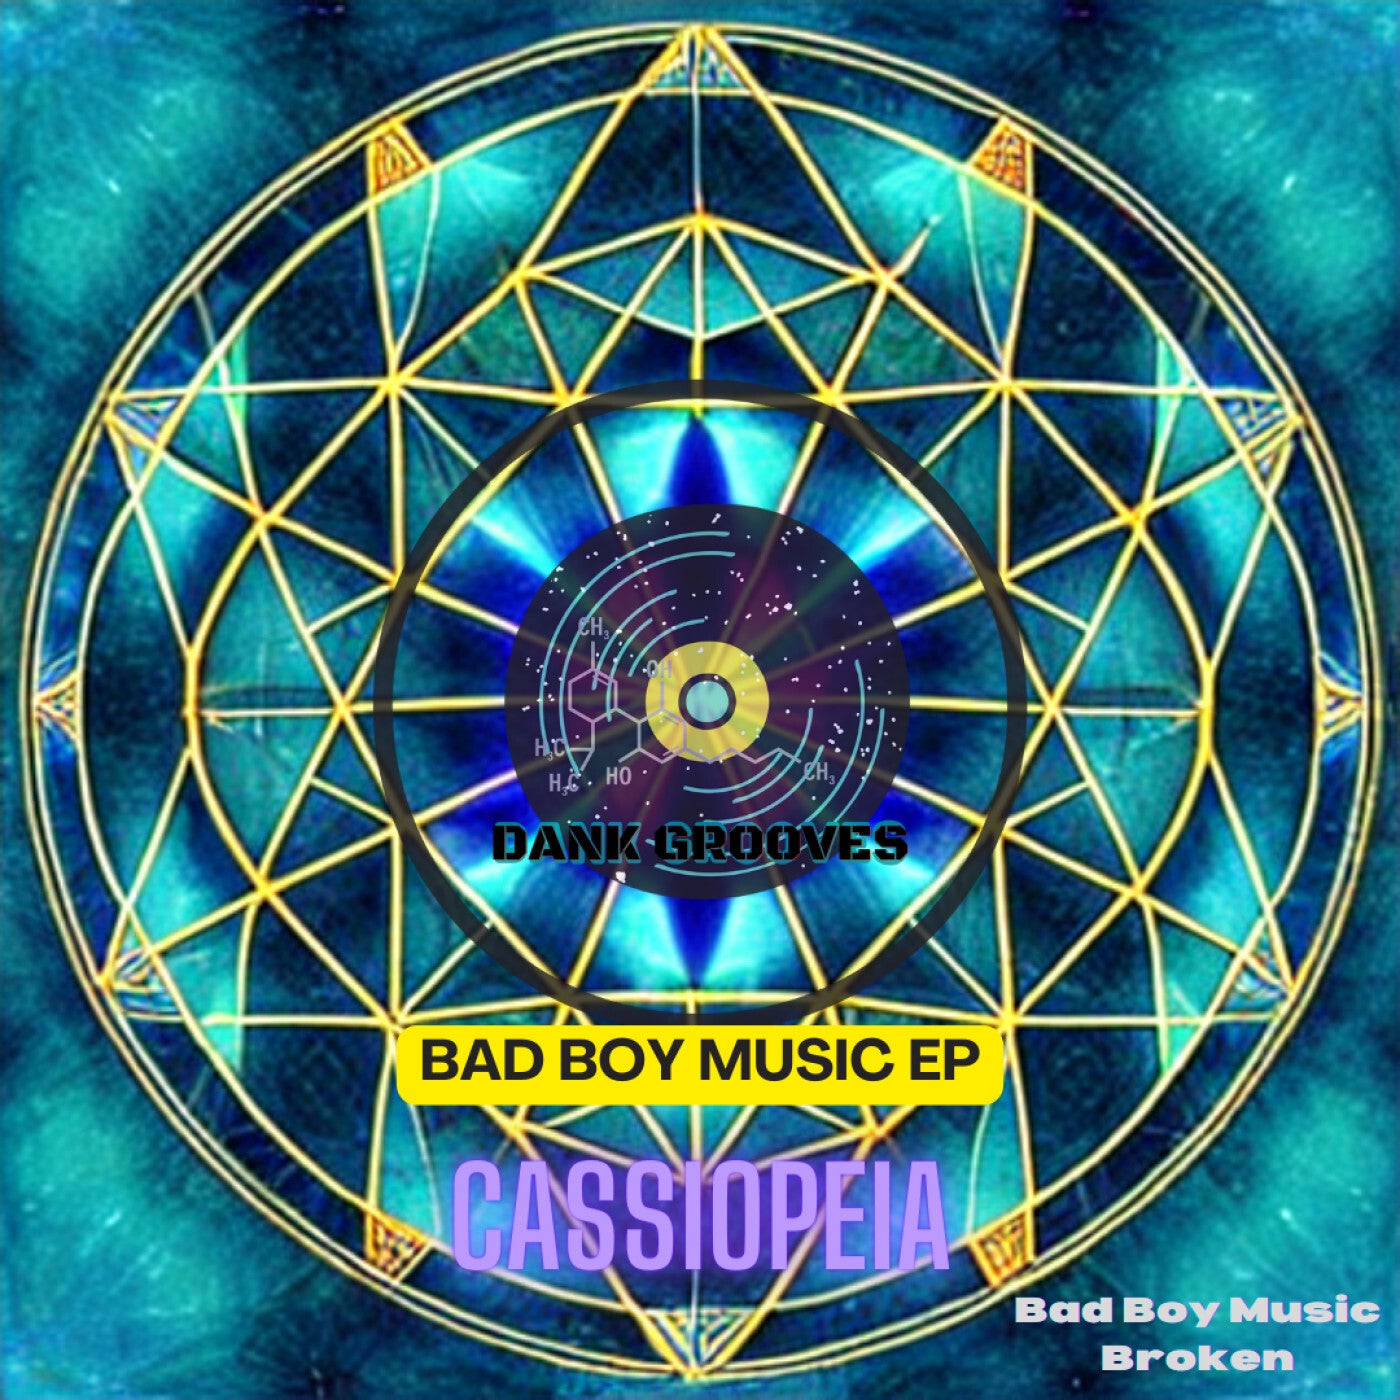 Bad Boy Music EP